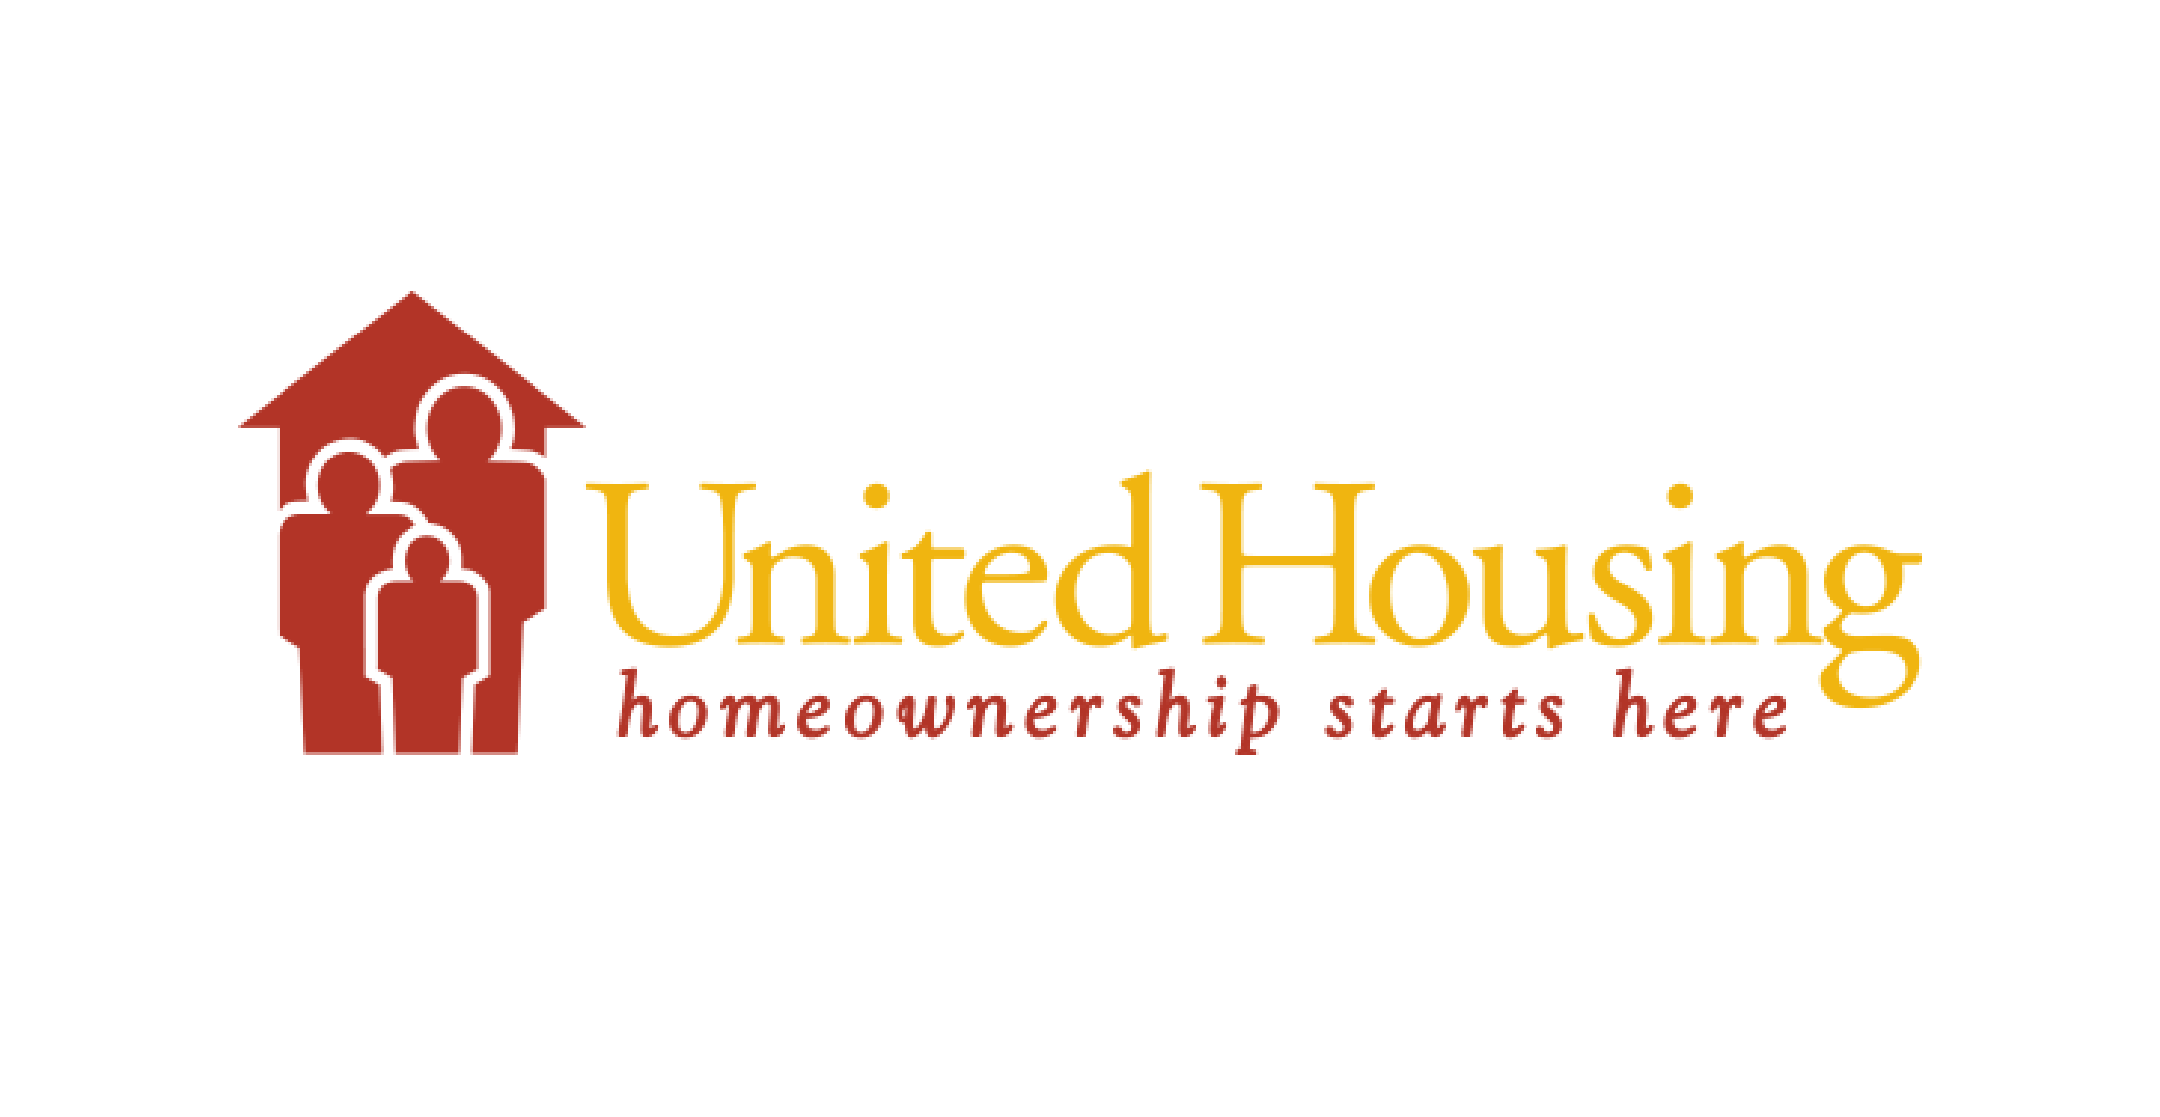 United Housing